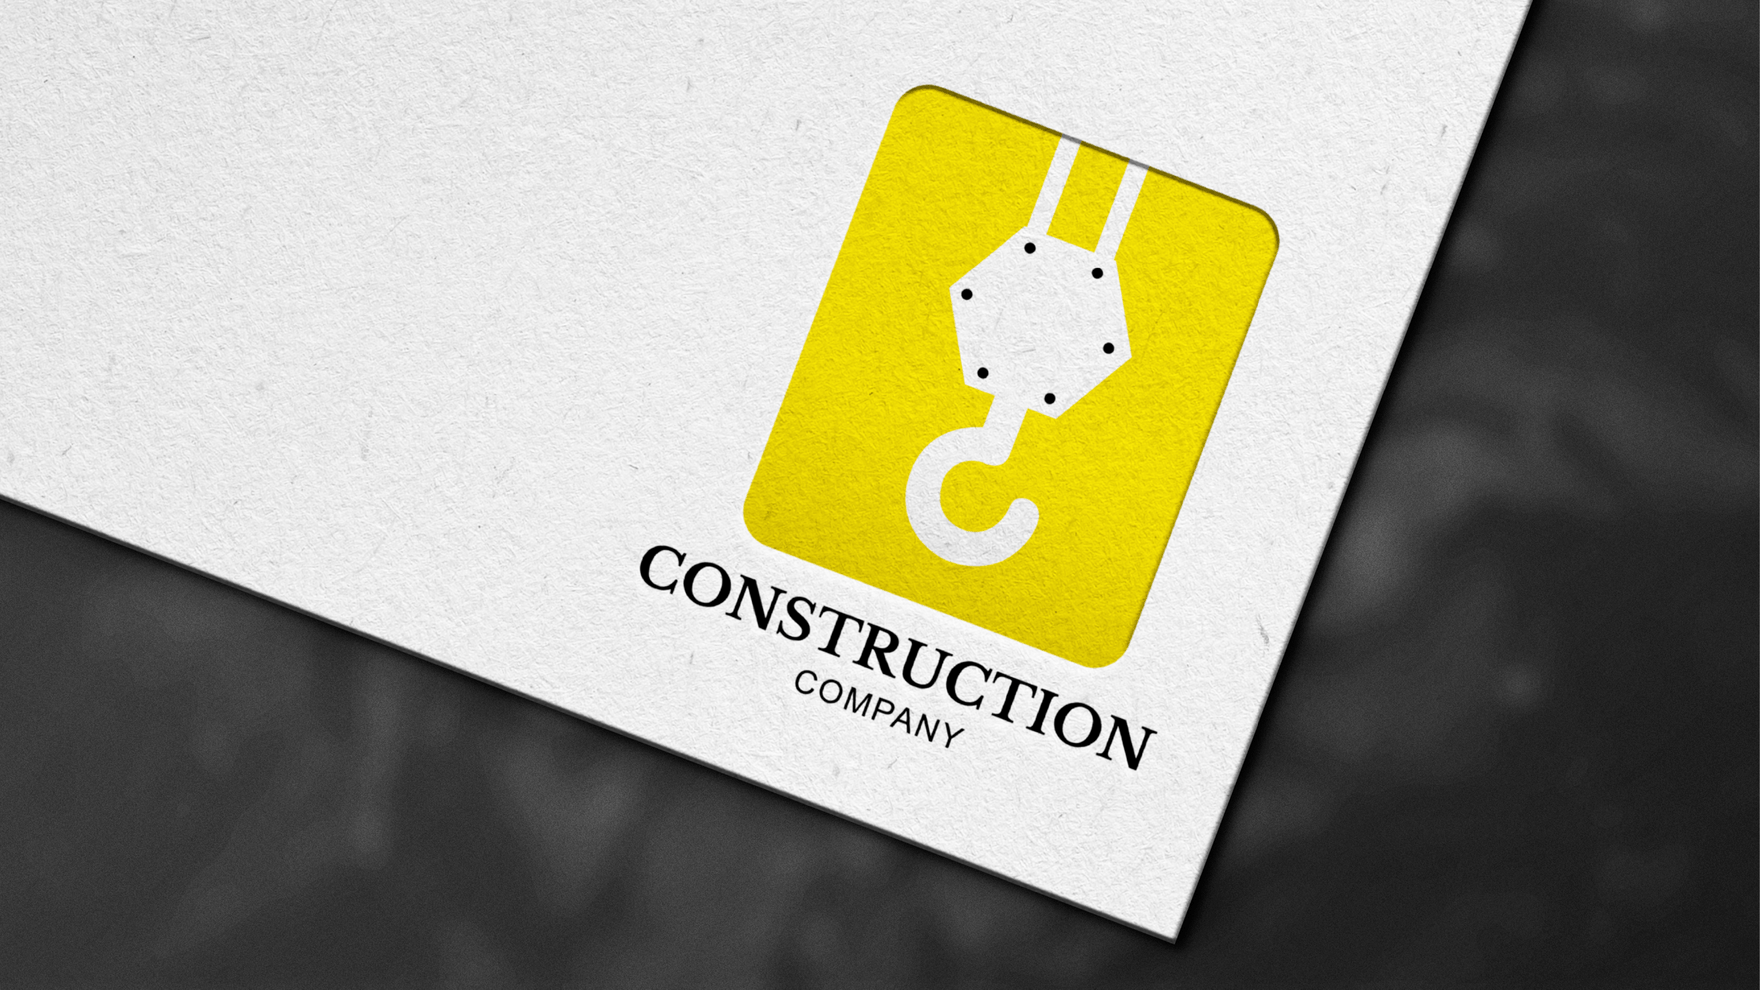 Construction Crane Hook Logo